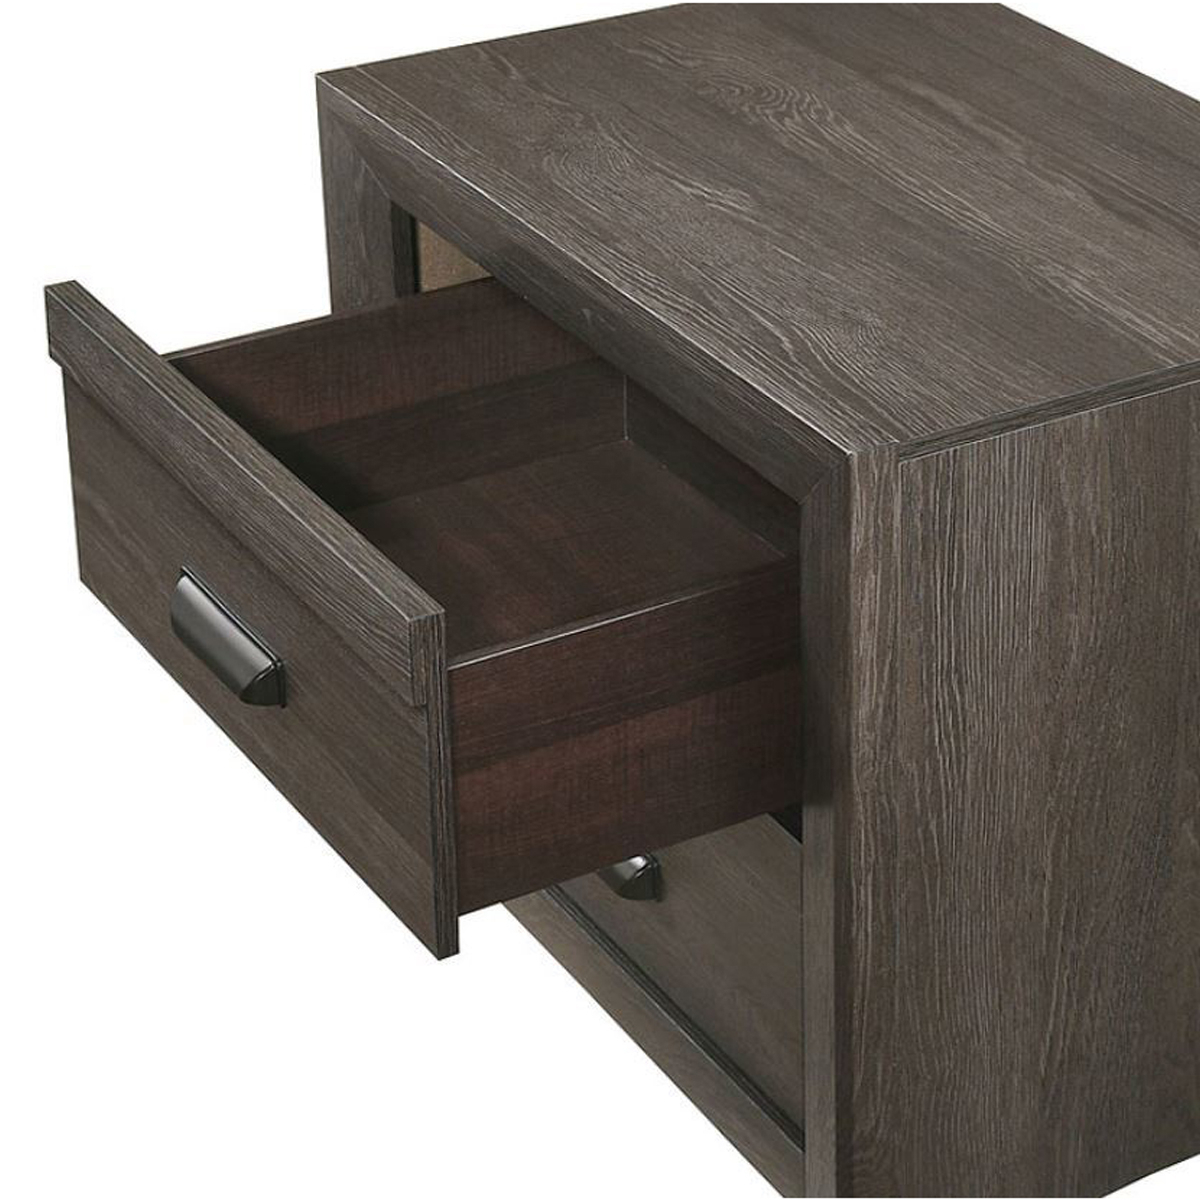 Wooden Nightstand With 2 Spacious Storage Drawers, Brown- Saltoro Sherpi